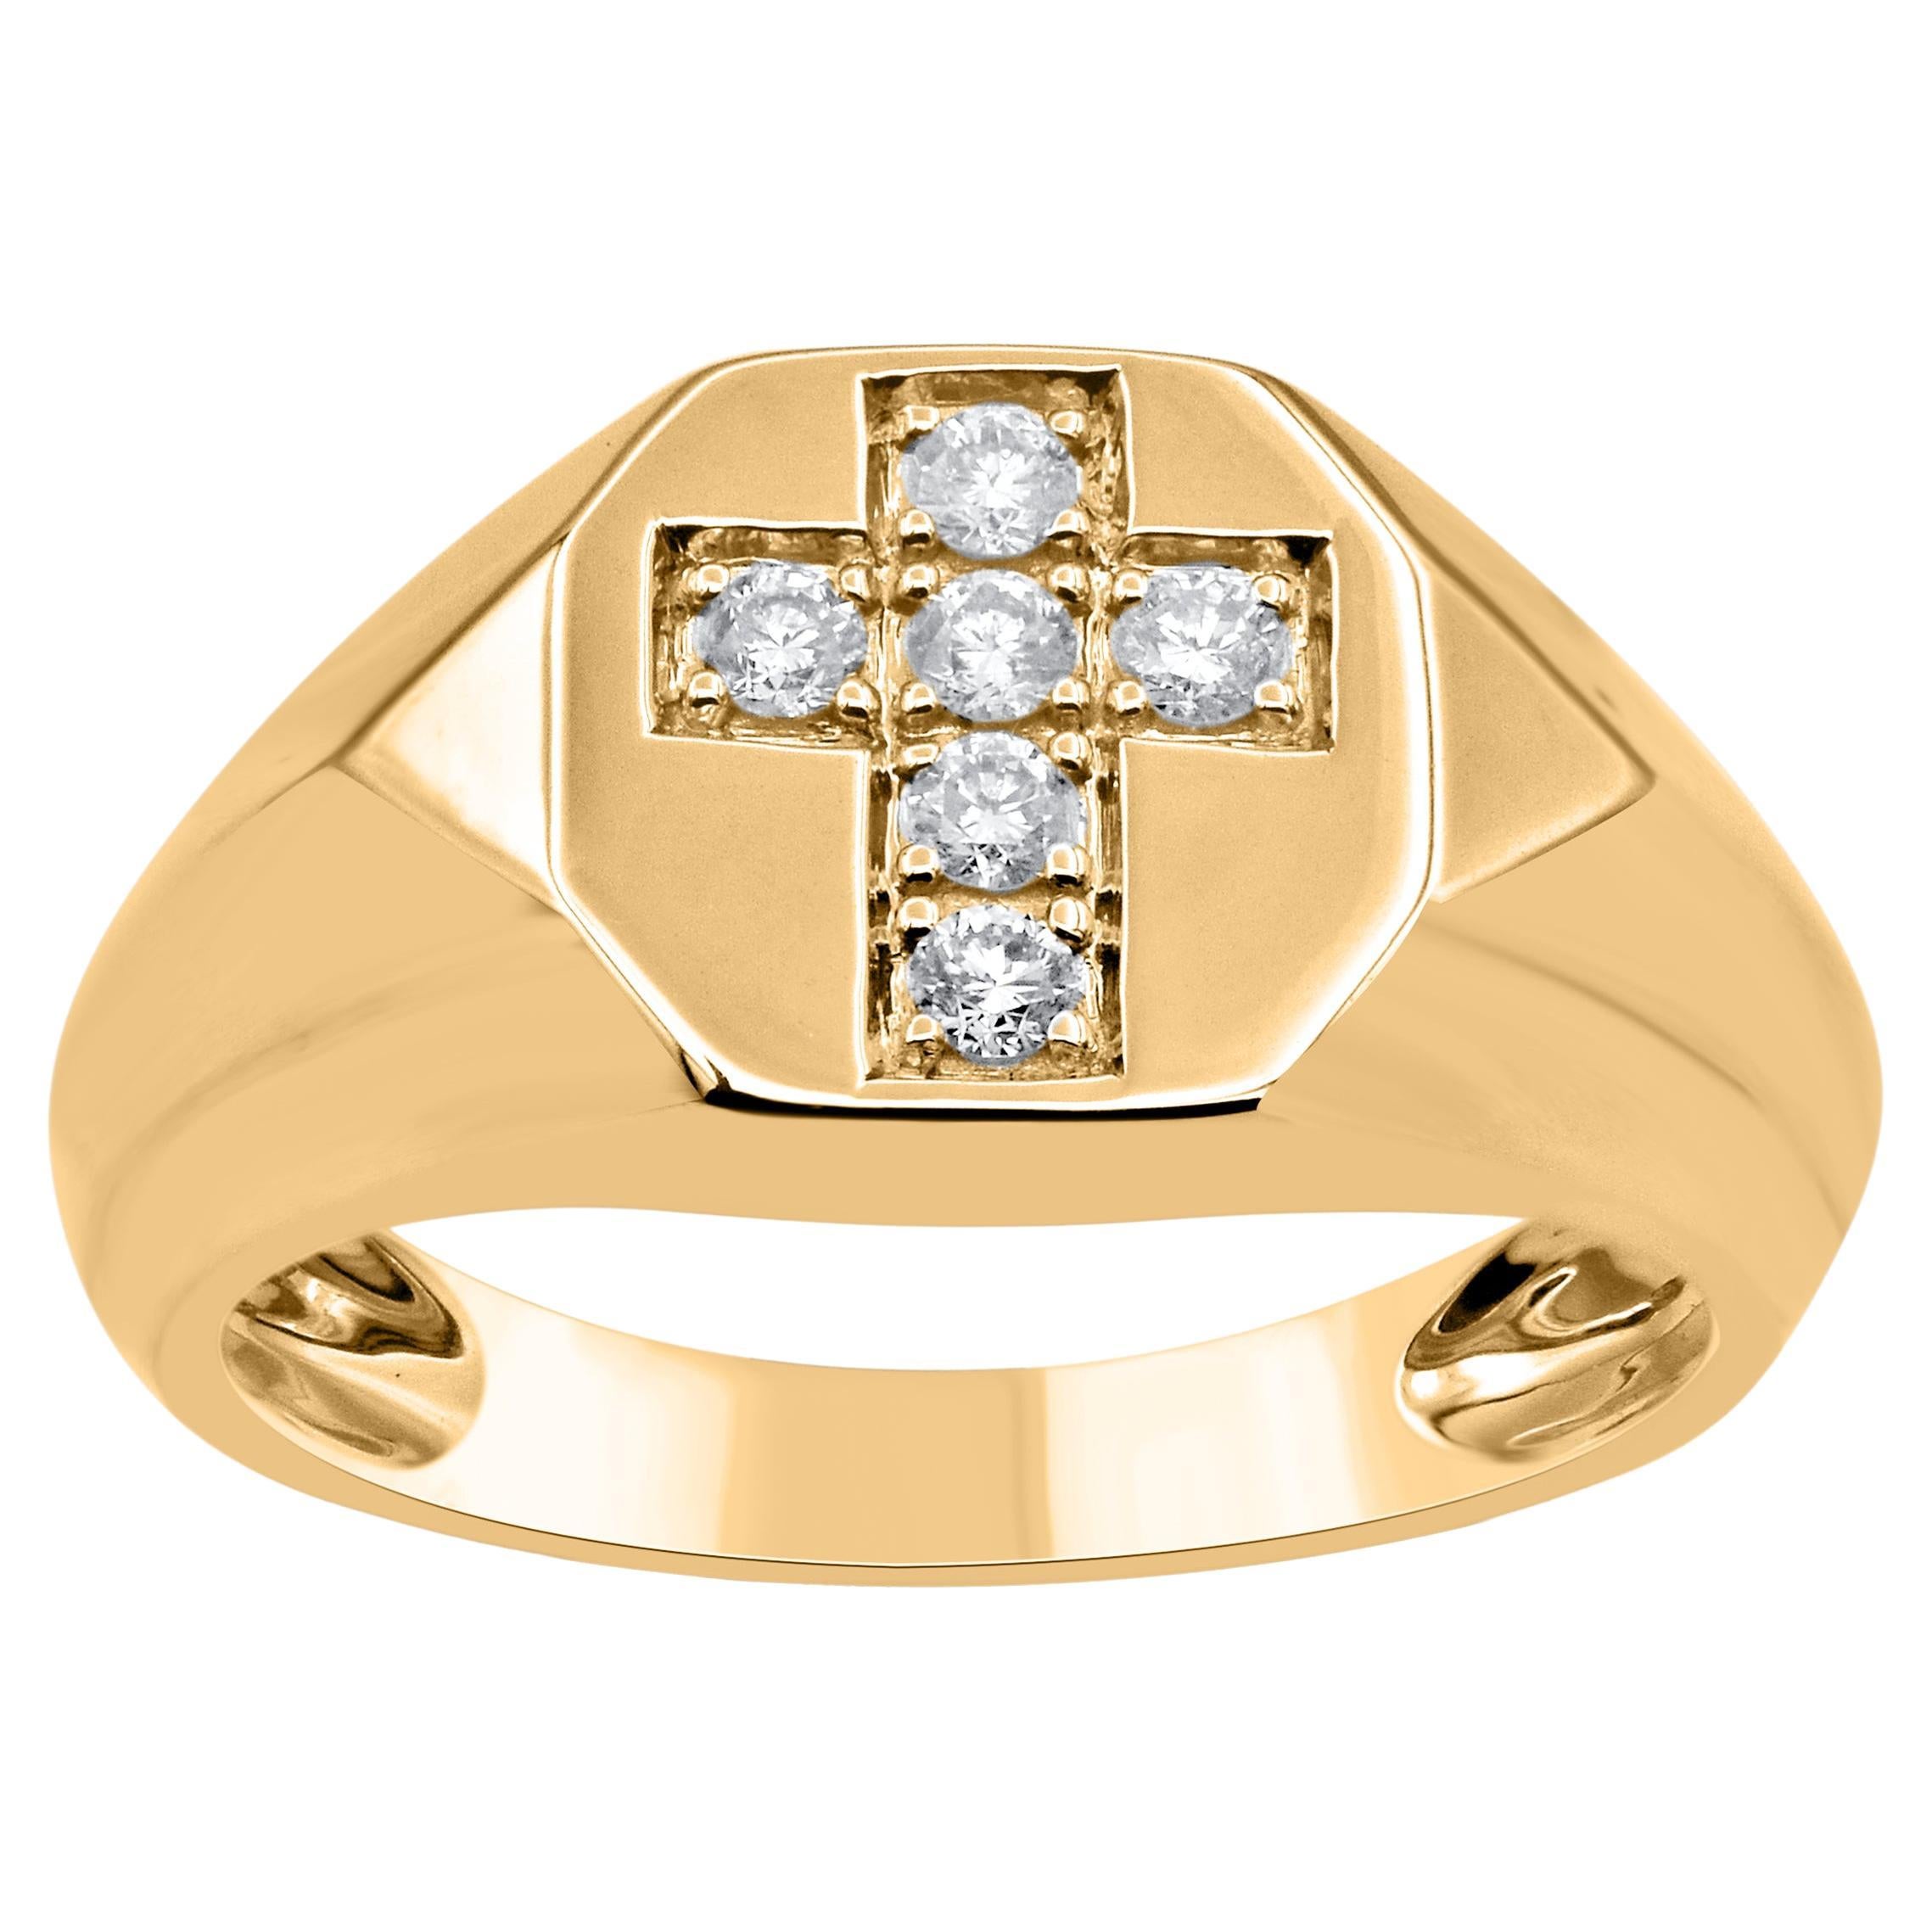 TJD 0.25 Carat Brilliant Cut Natural Diamond 18KT Yellow Gold Men's Cross Ring